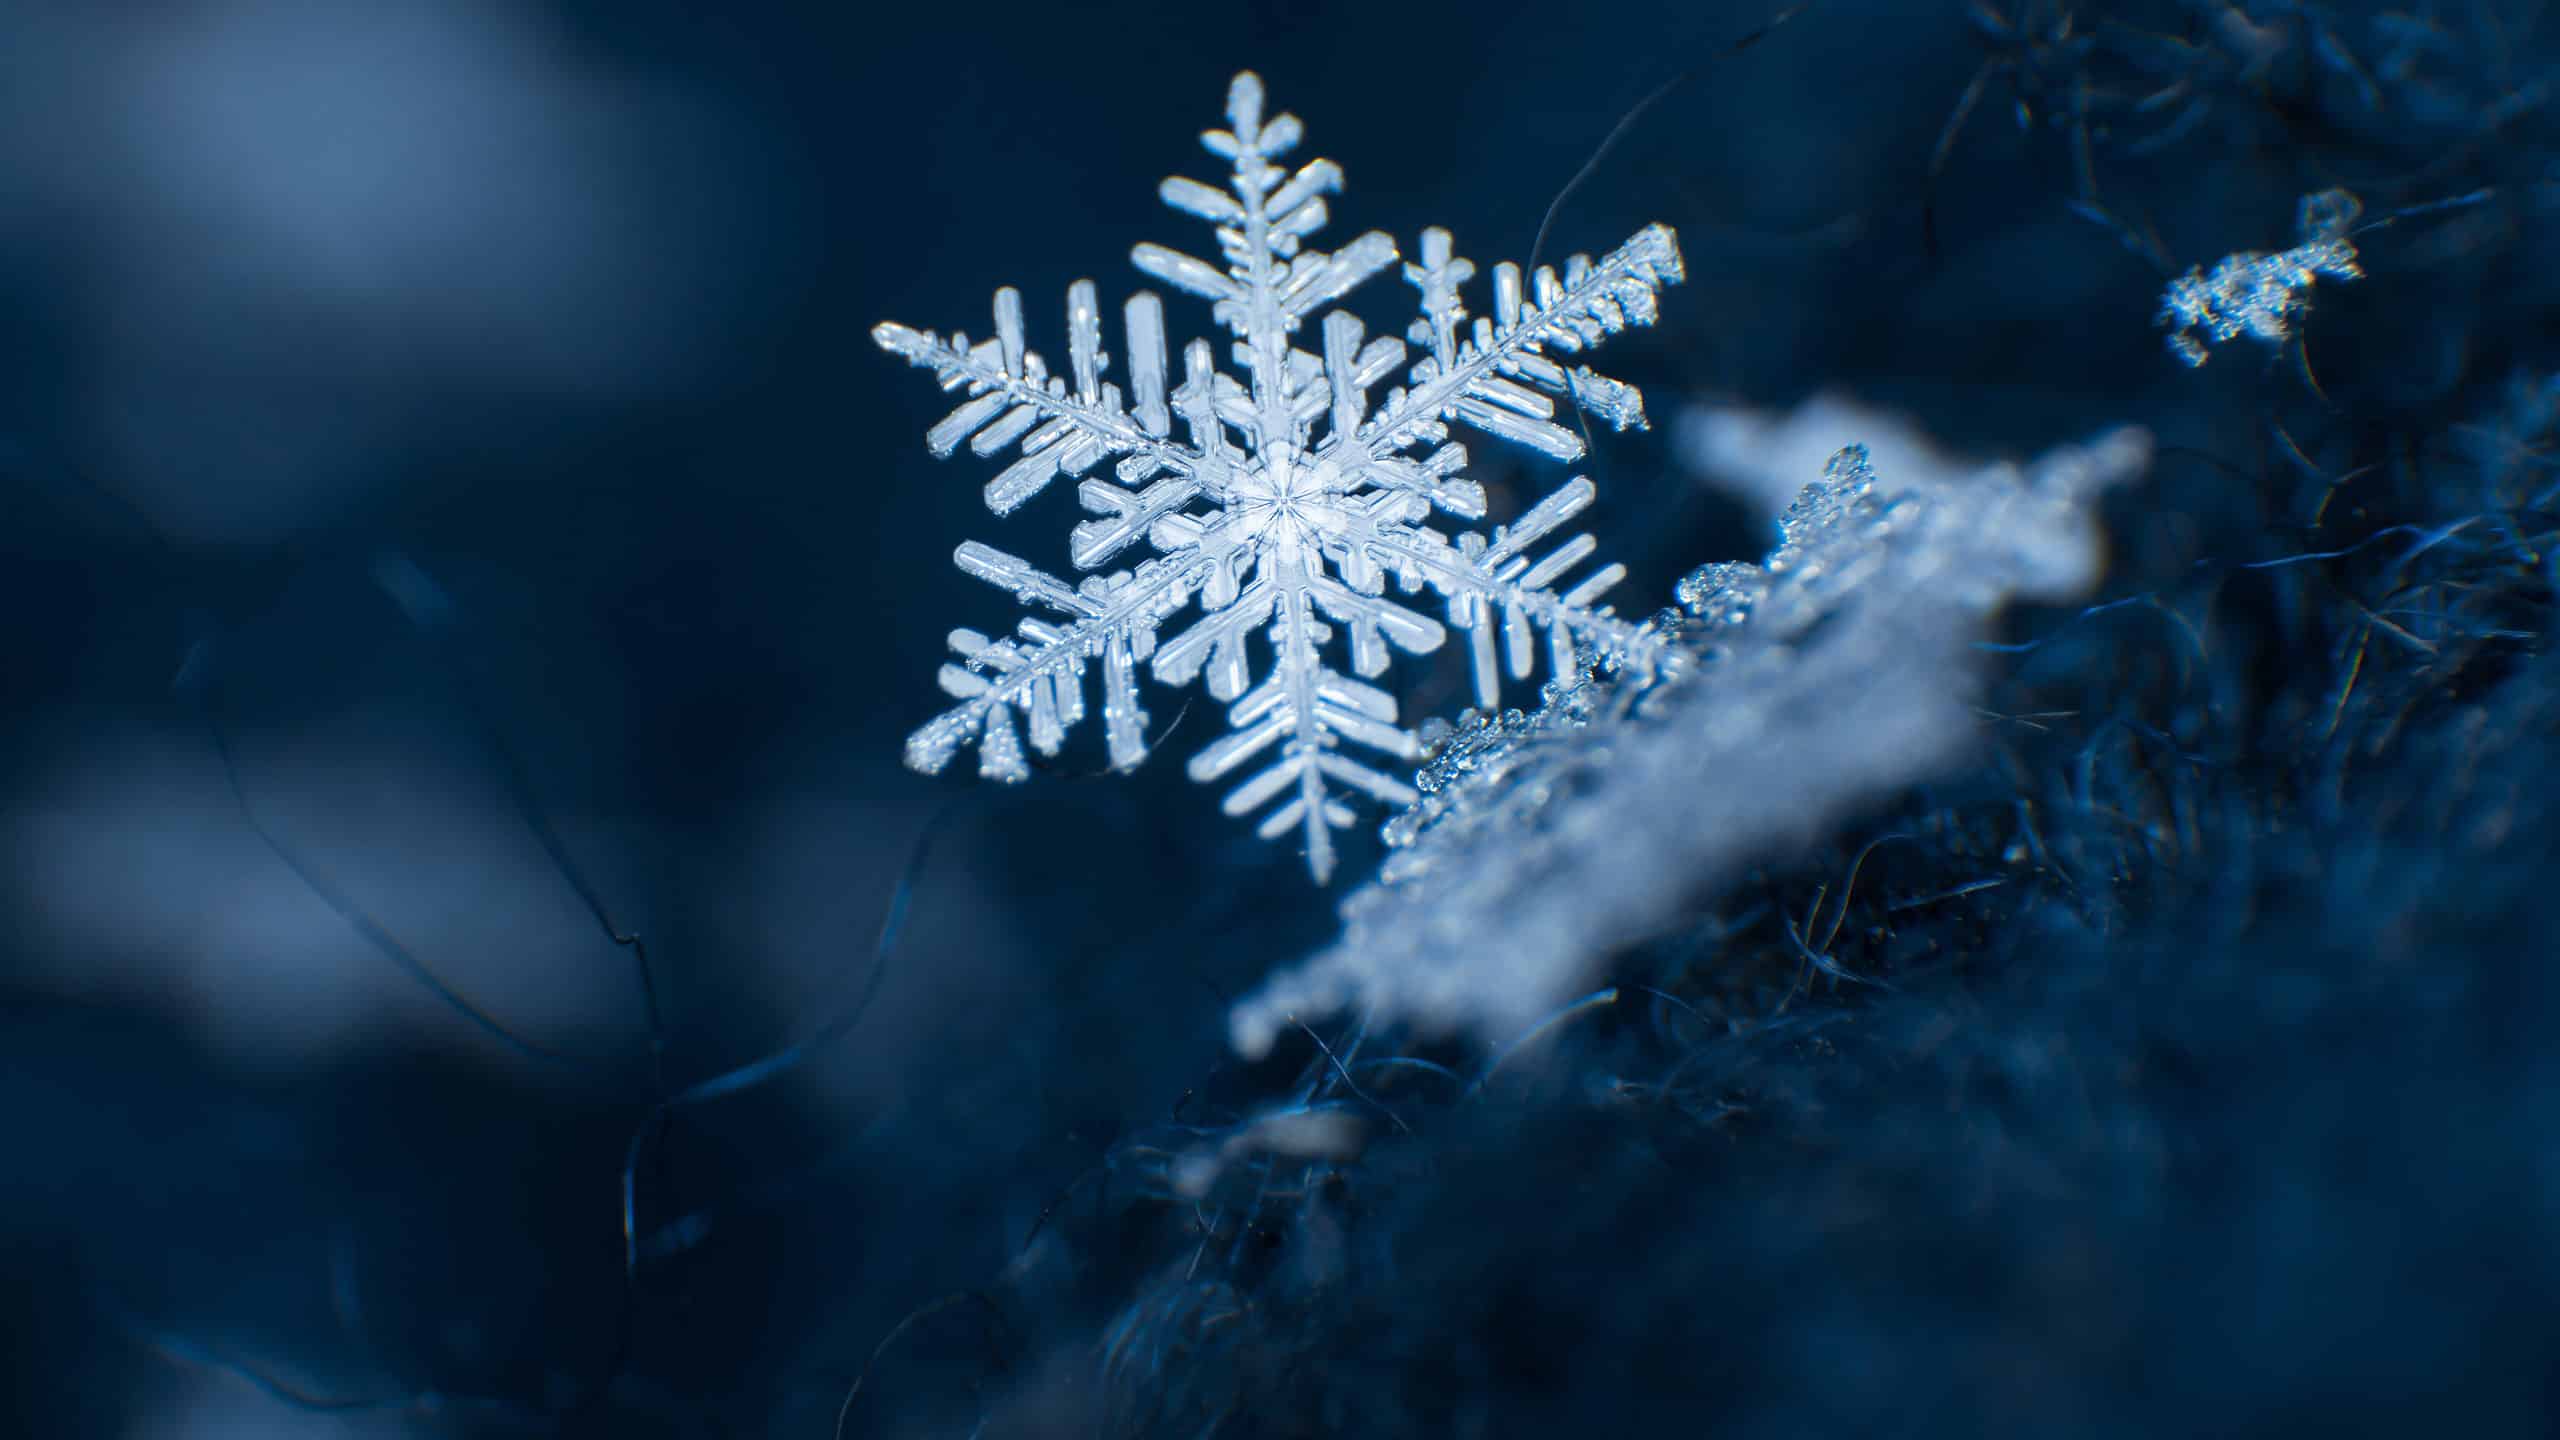 Single snowflake with dark blue, gloomy backdrop